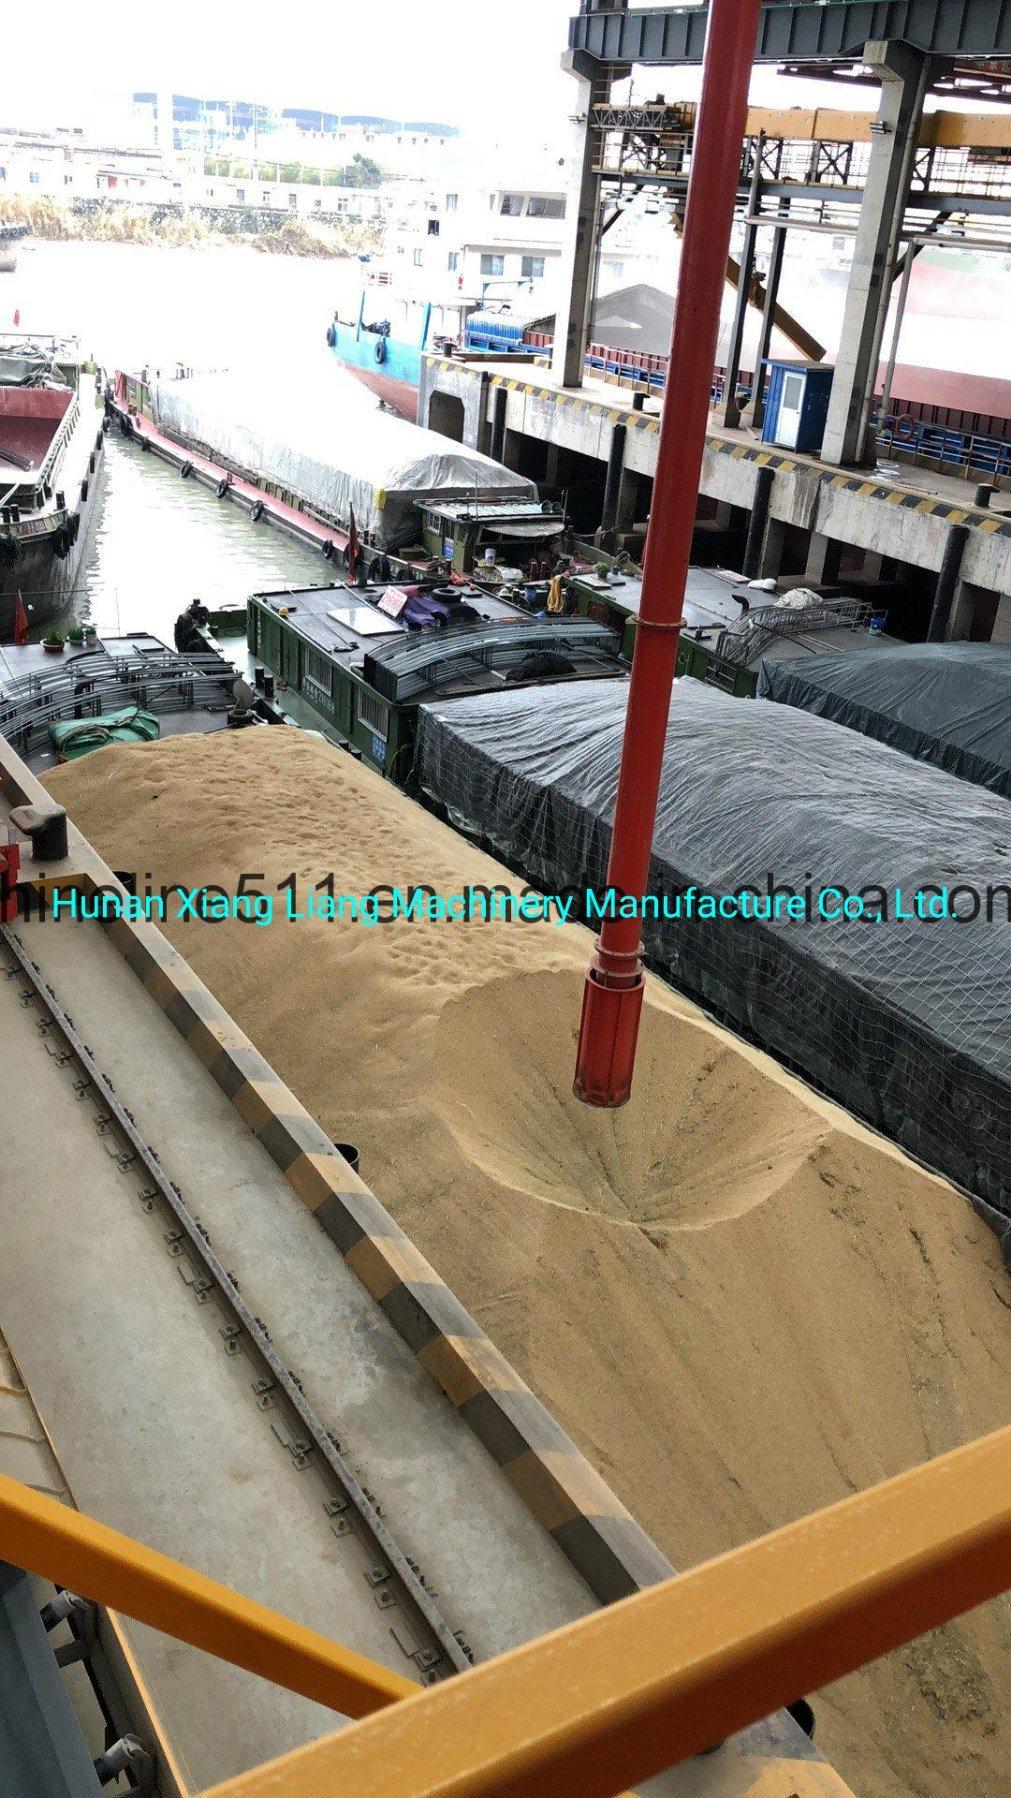 Heat Resistant Transport Xiangliang Brand Gran Pump Mobile Grain Unloader